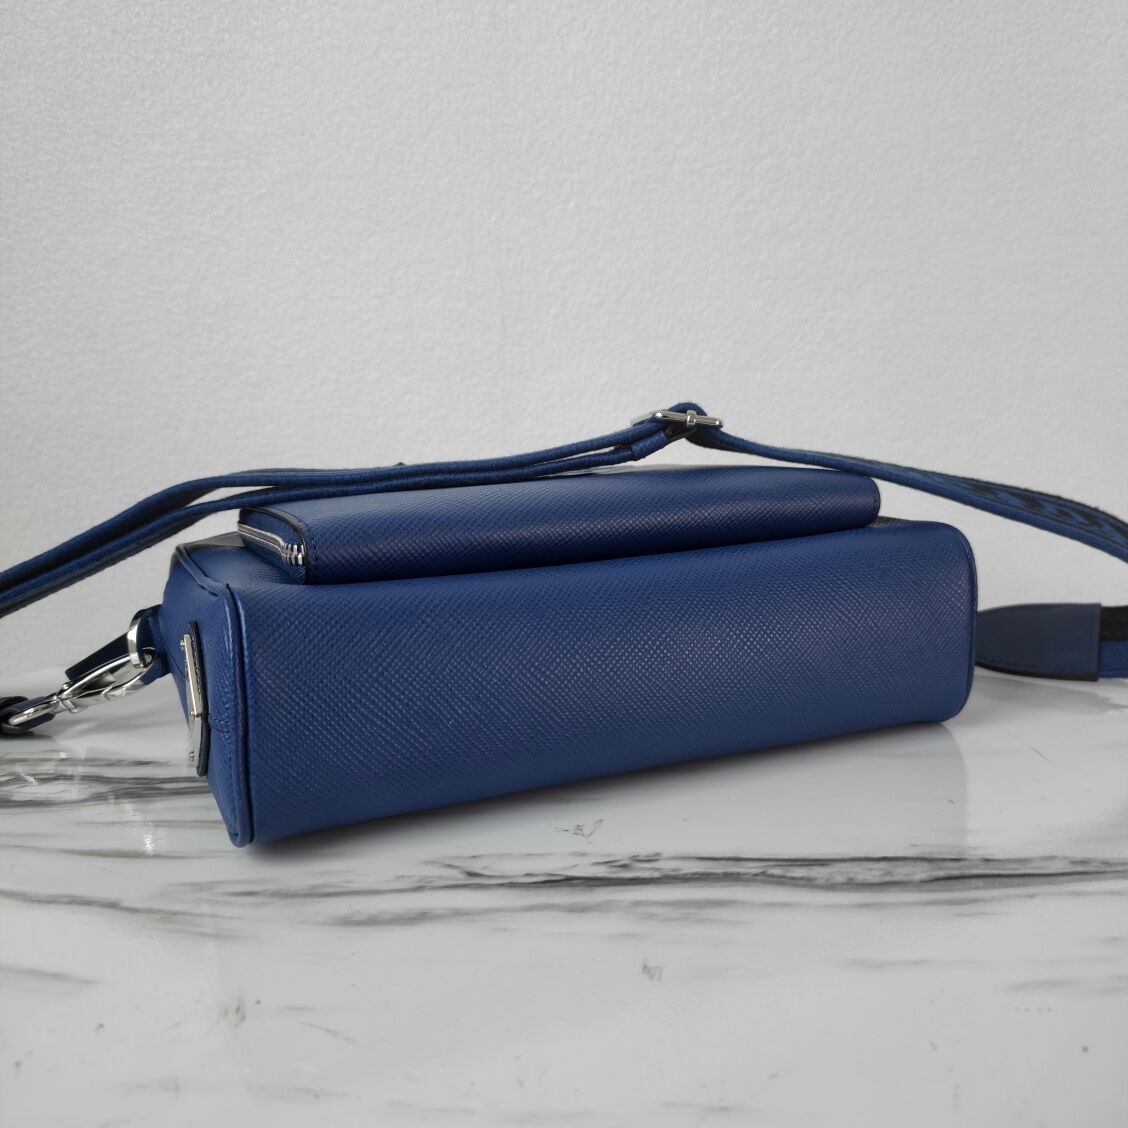 Prada Re-Edition 2005 Saffiano leather bag 2HD052 blue